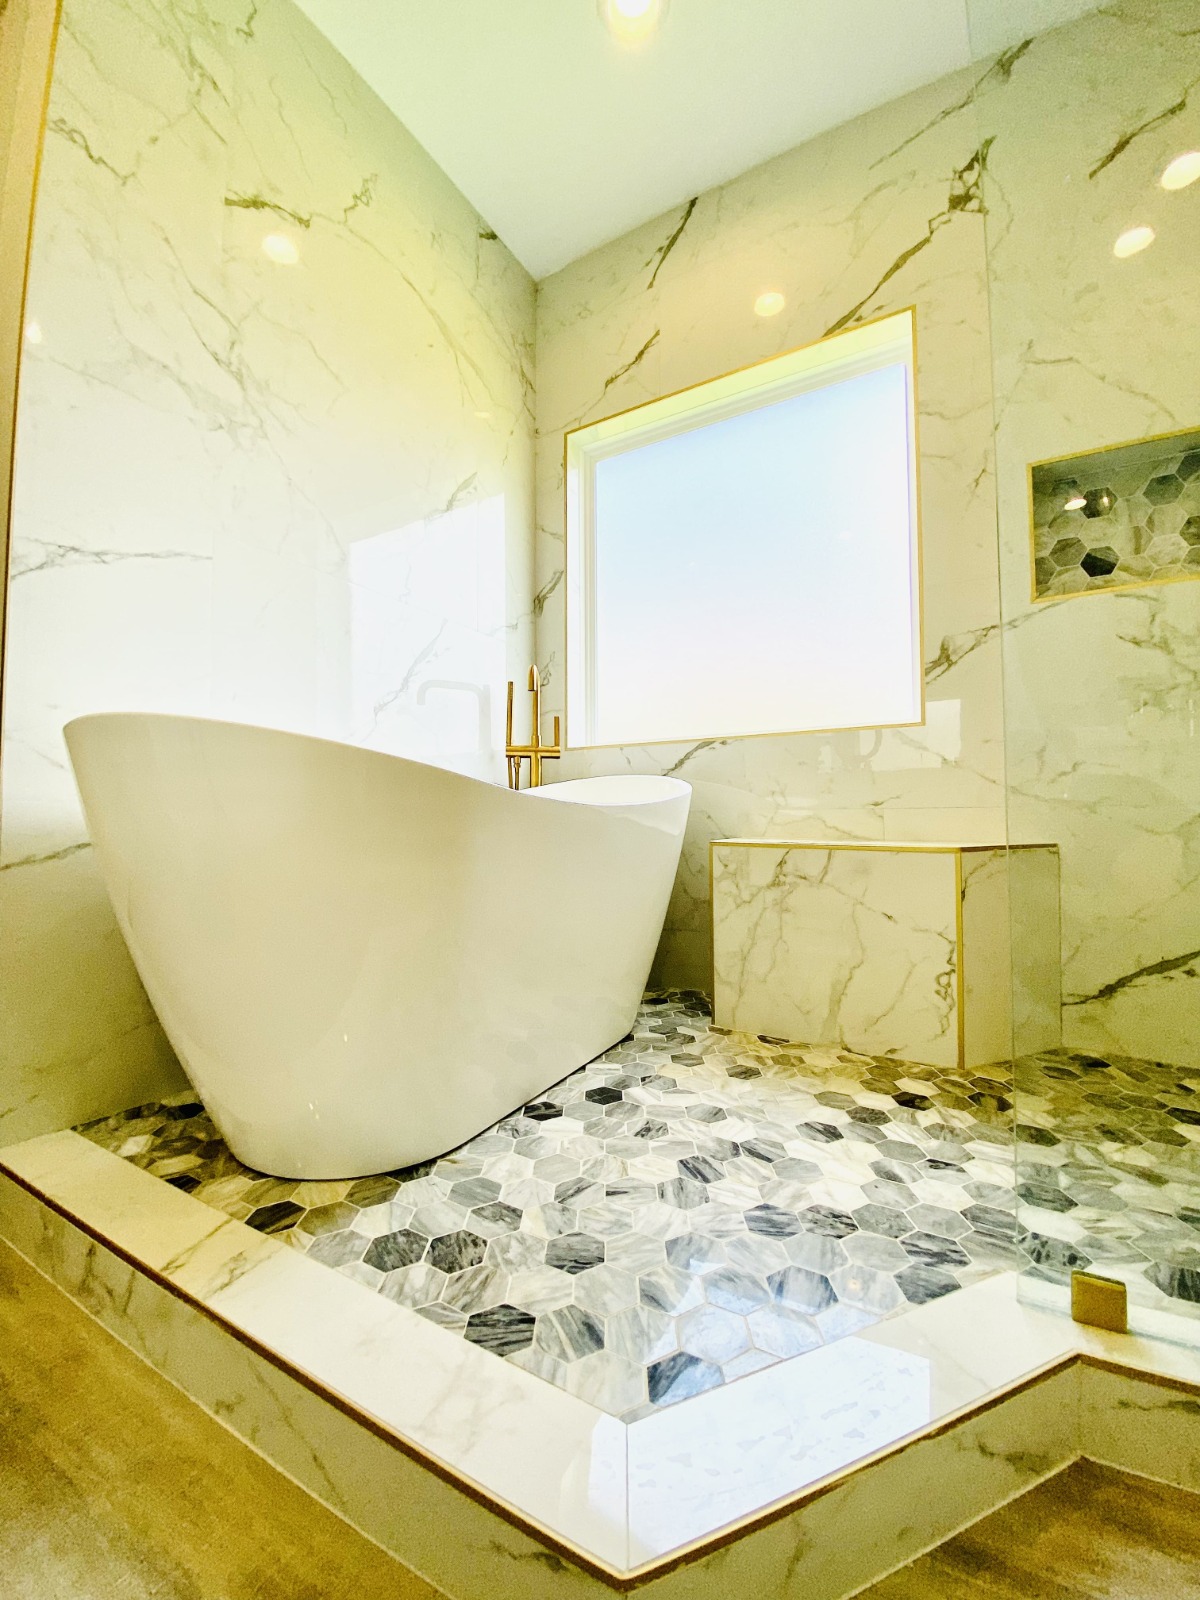 Viannis-Master-Bathroom-remodeling19